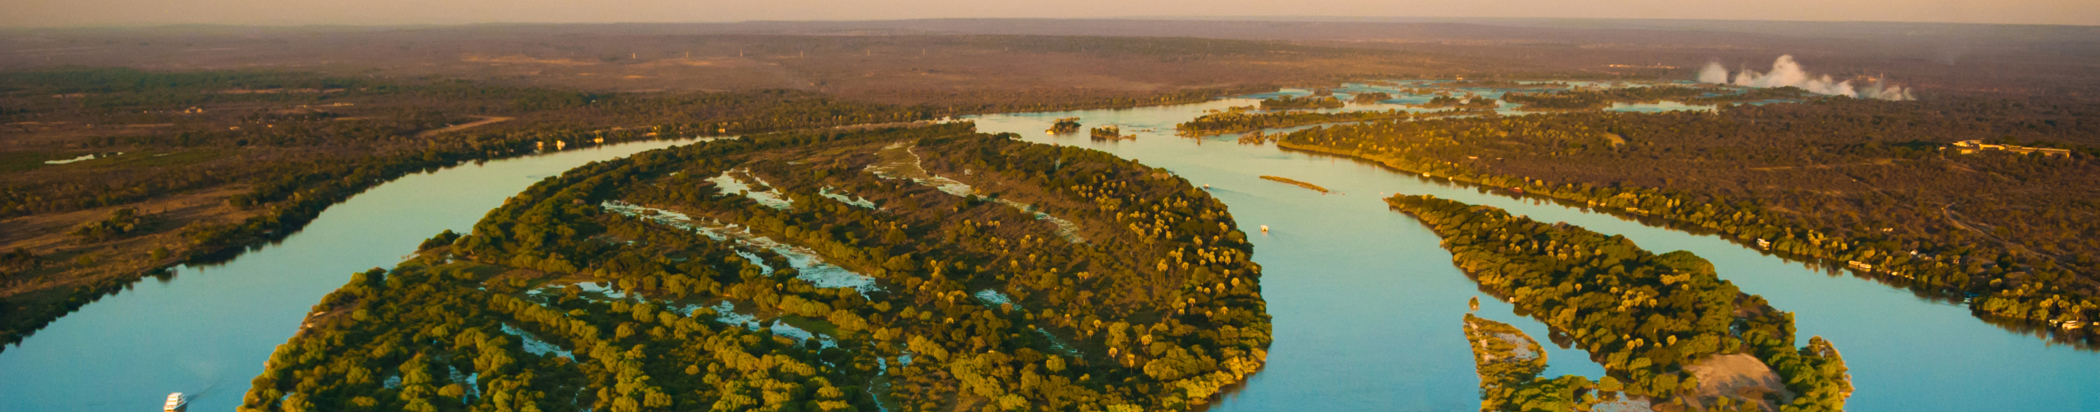 Zambezi river from the air